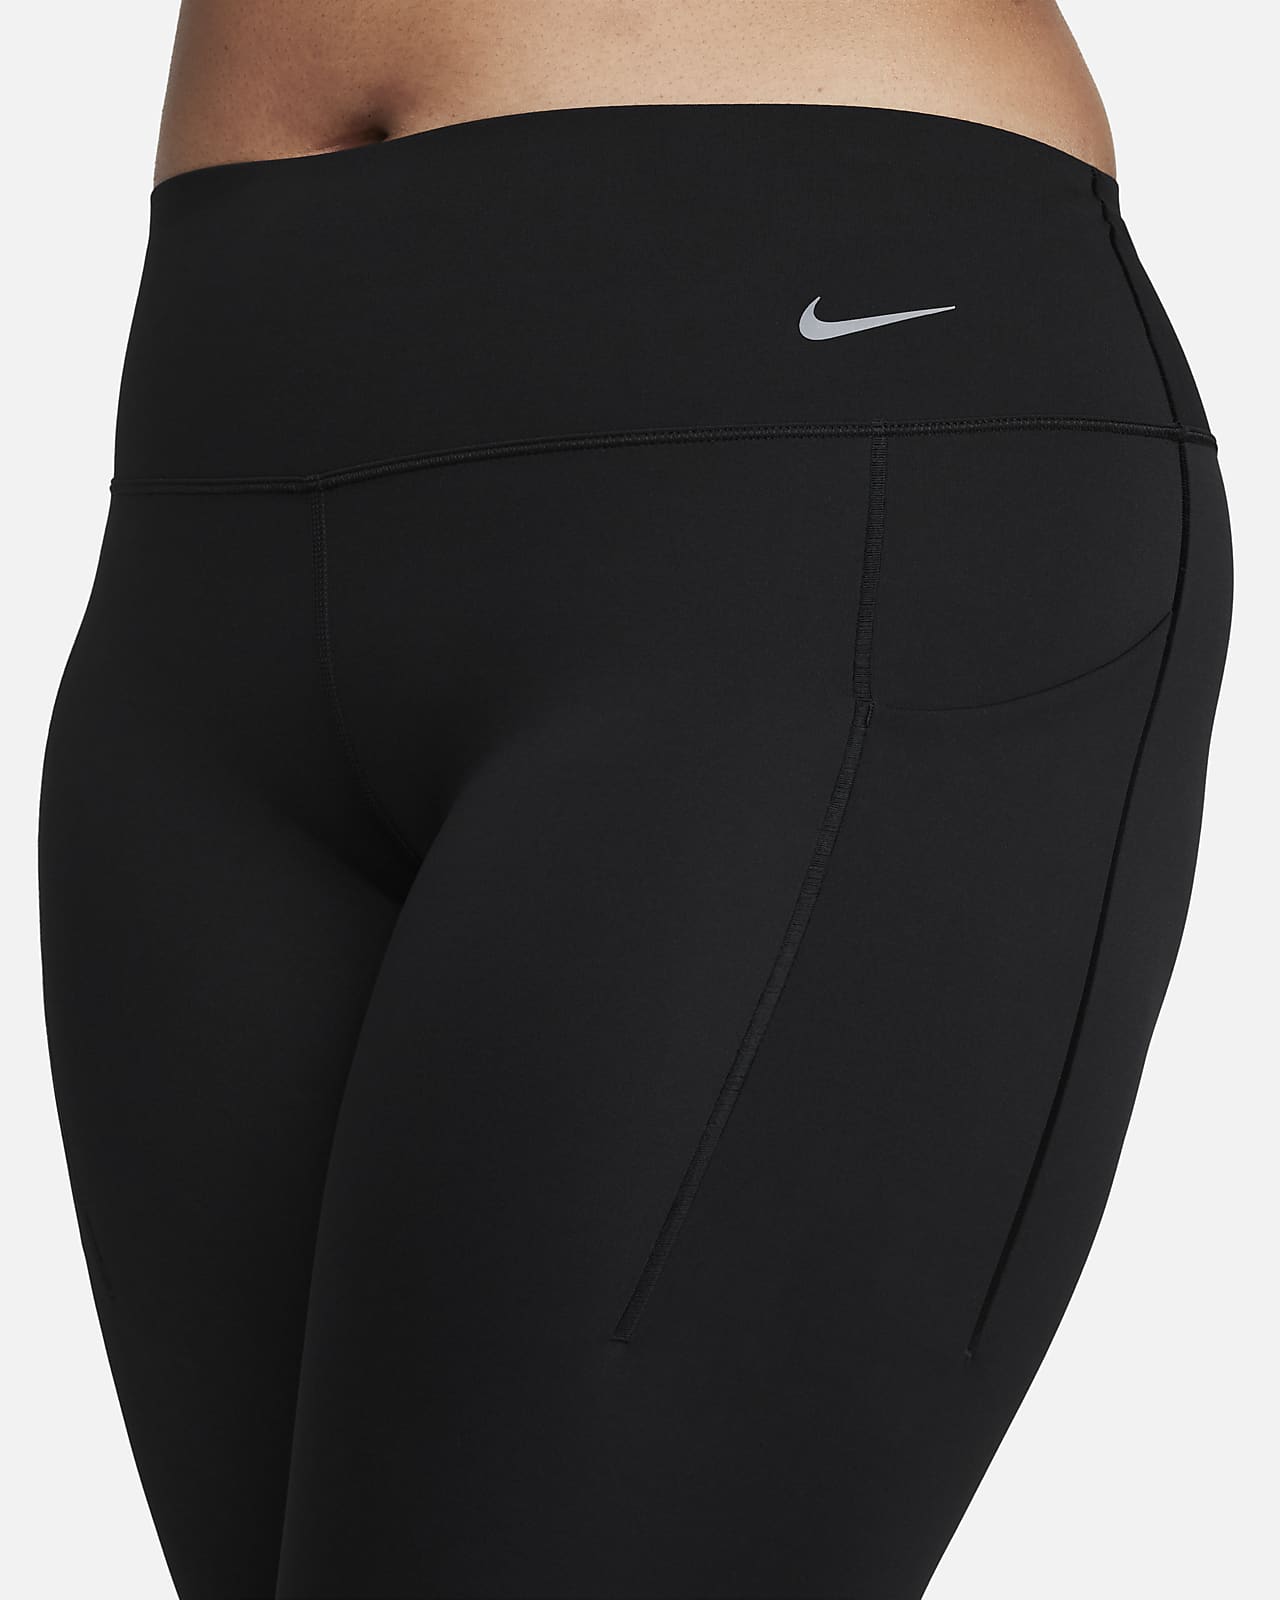  Nike Women's Victory Training Capris, Dri-FIT Leggings for Women,  Black/Black/White, XS : Clothing, Shoes & Jewelry